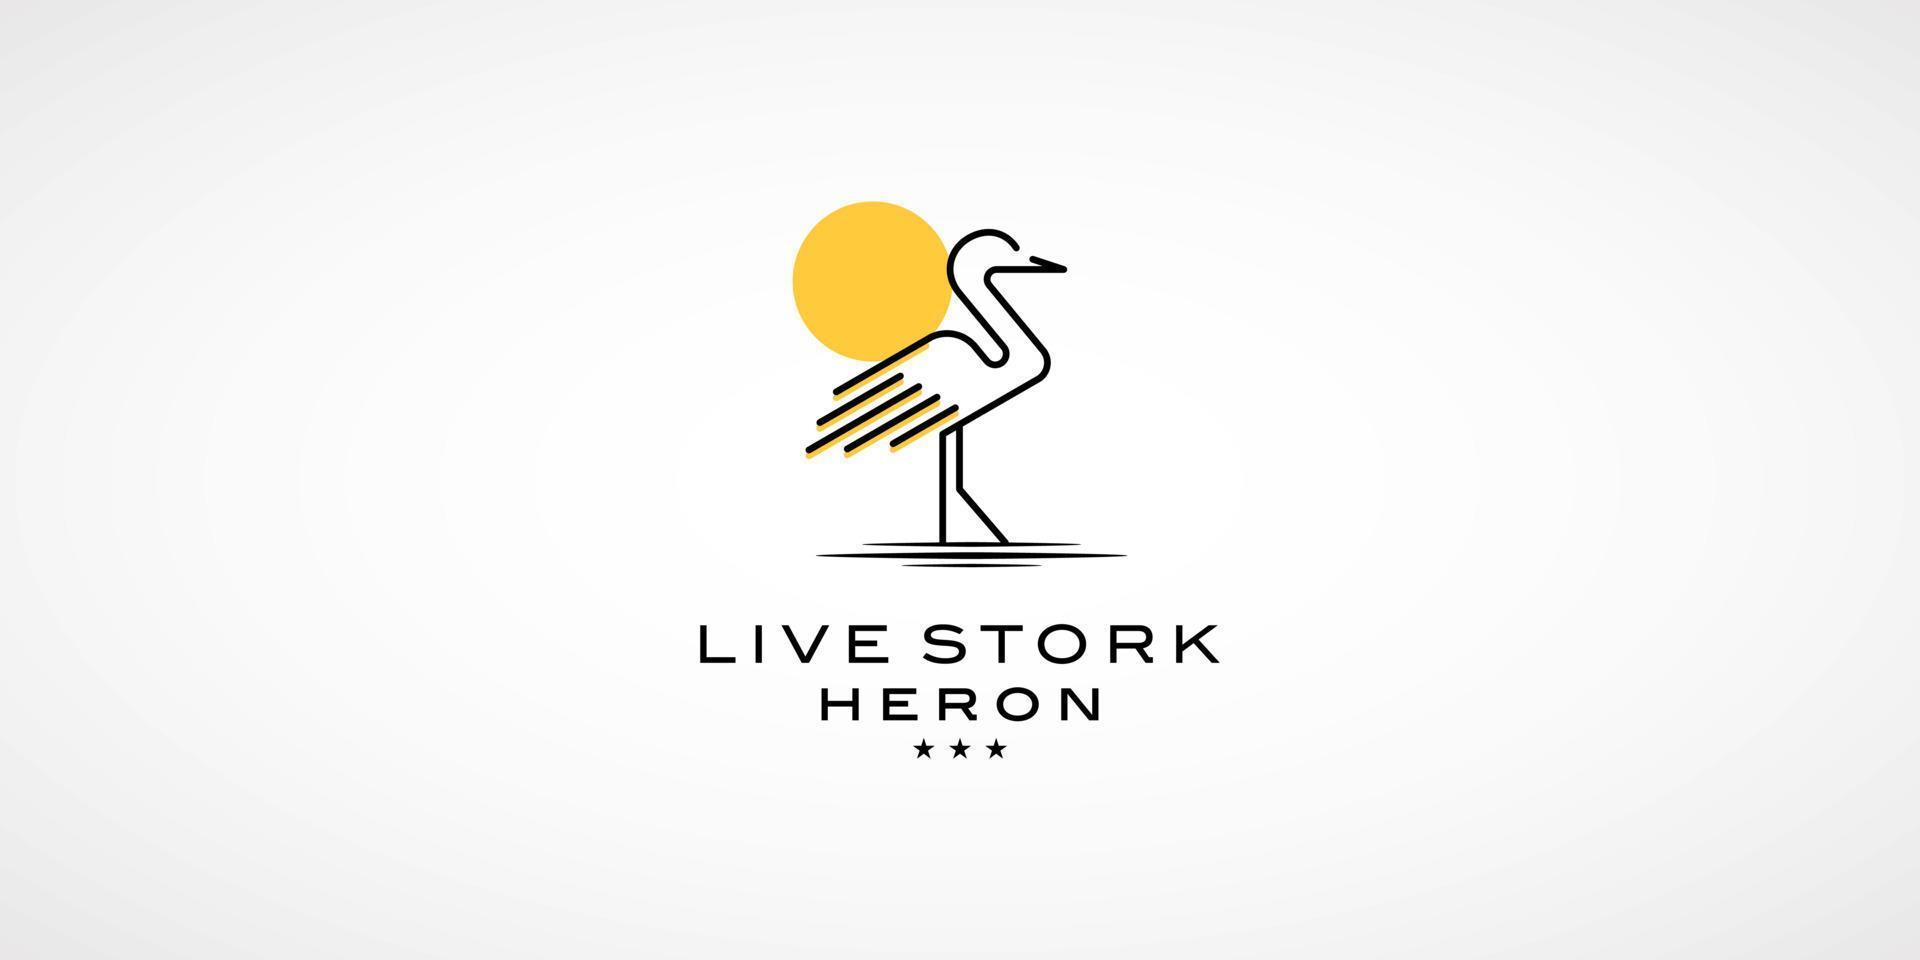 Stork Crane Heron Minimal Simple Animal Fly Bird Wing Nature Silhouette Vector Logo Design